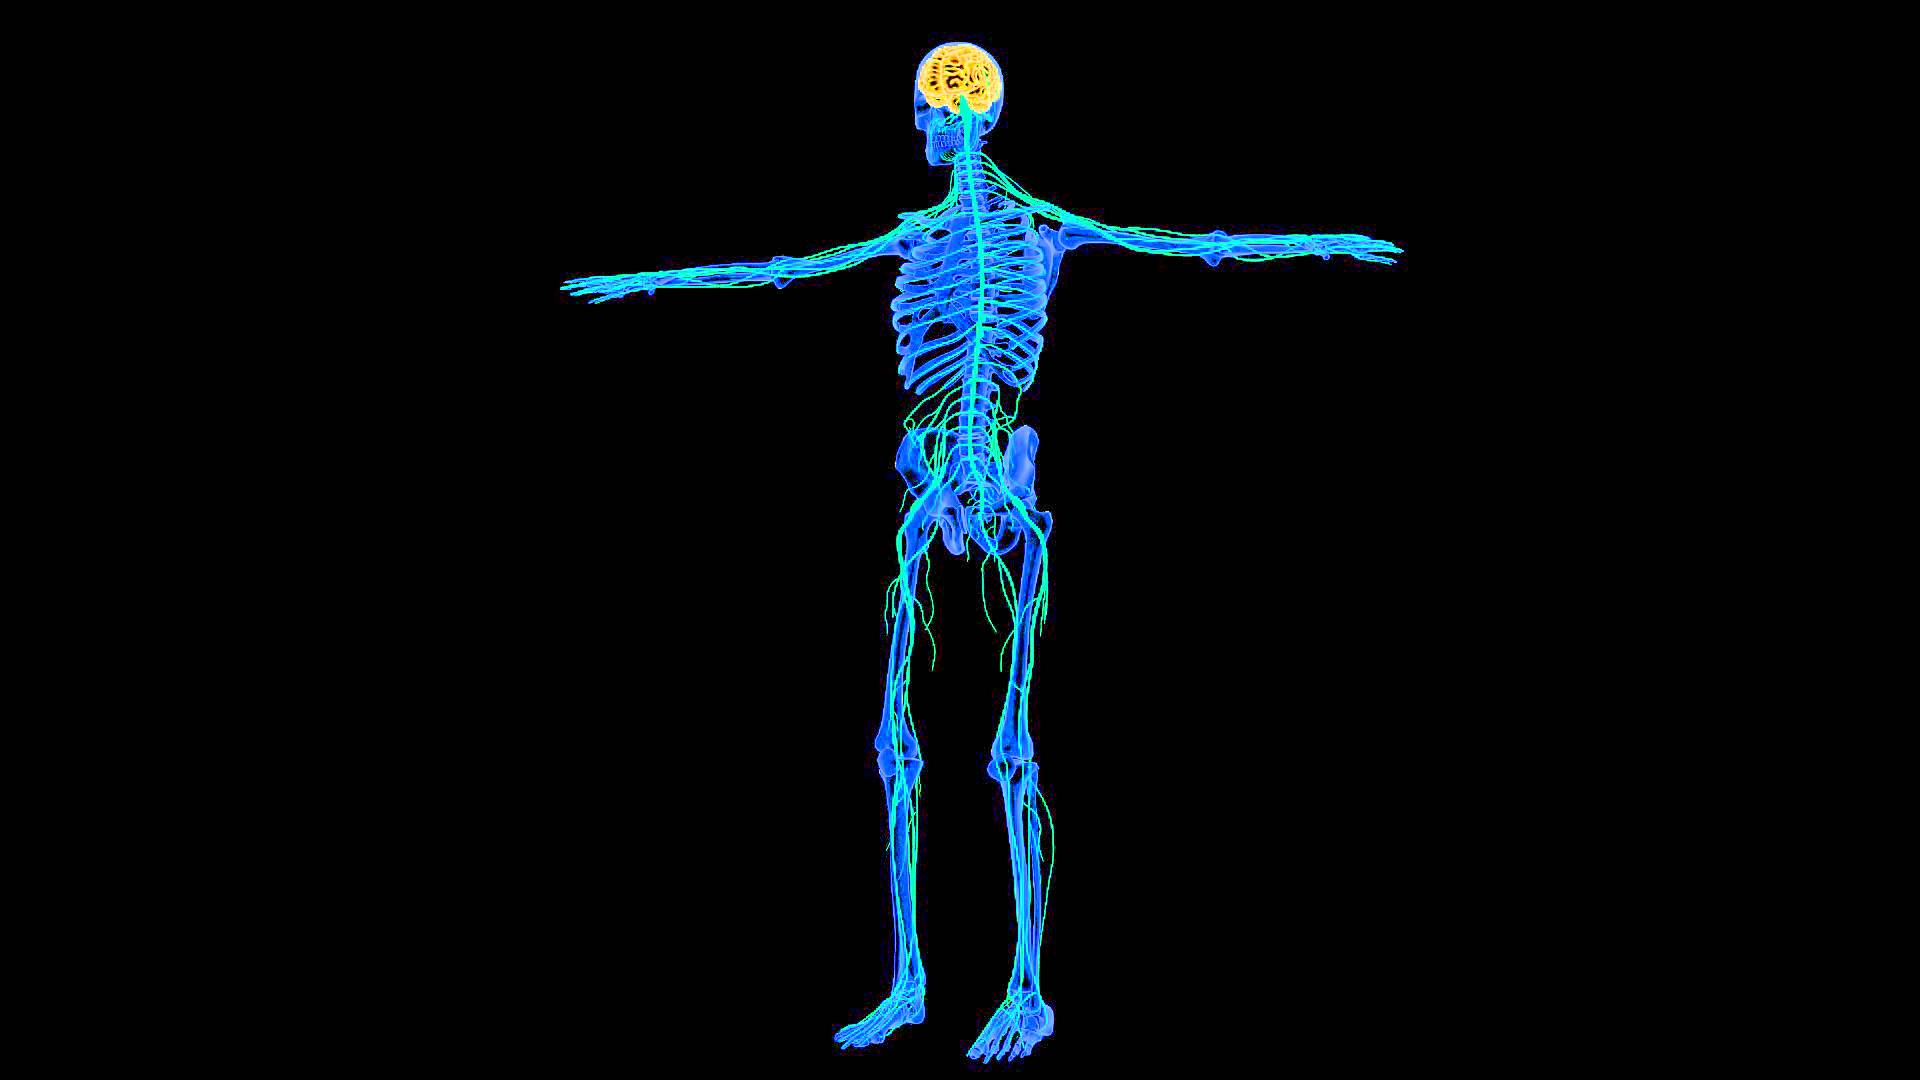 The Nervous System Wallpaper .hipwallpaper.com